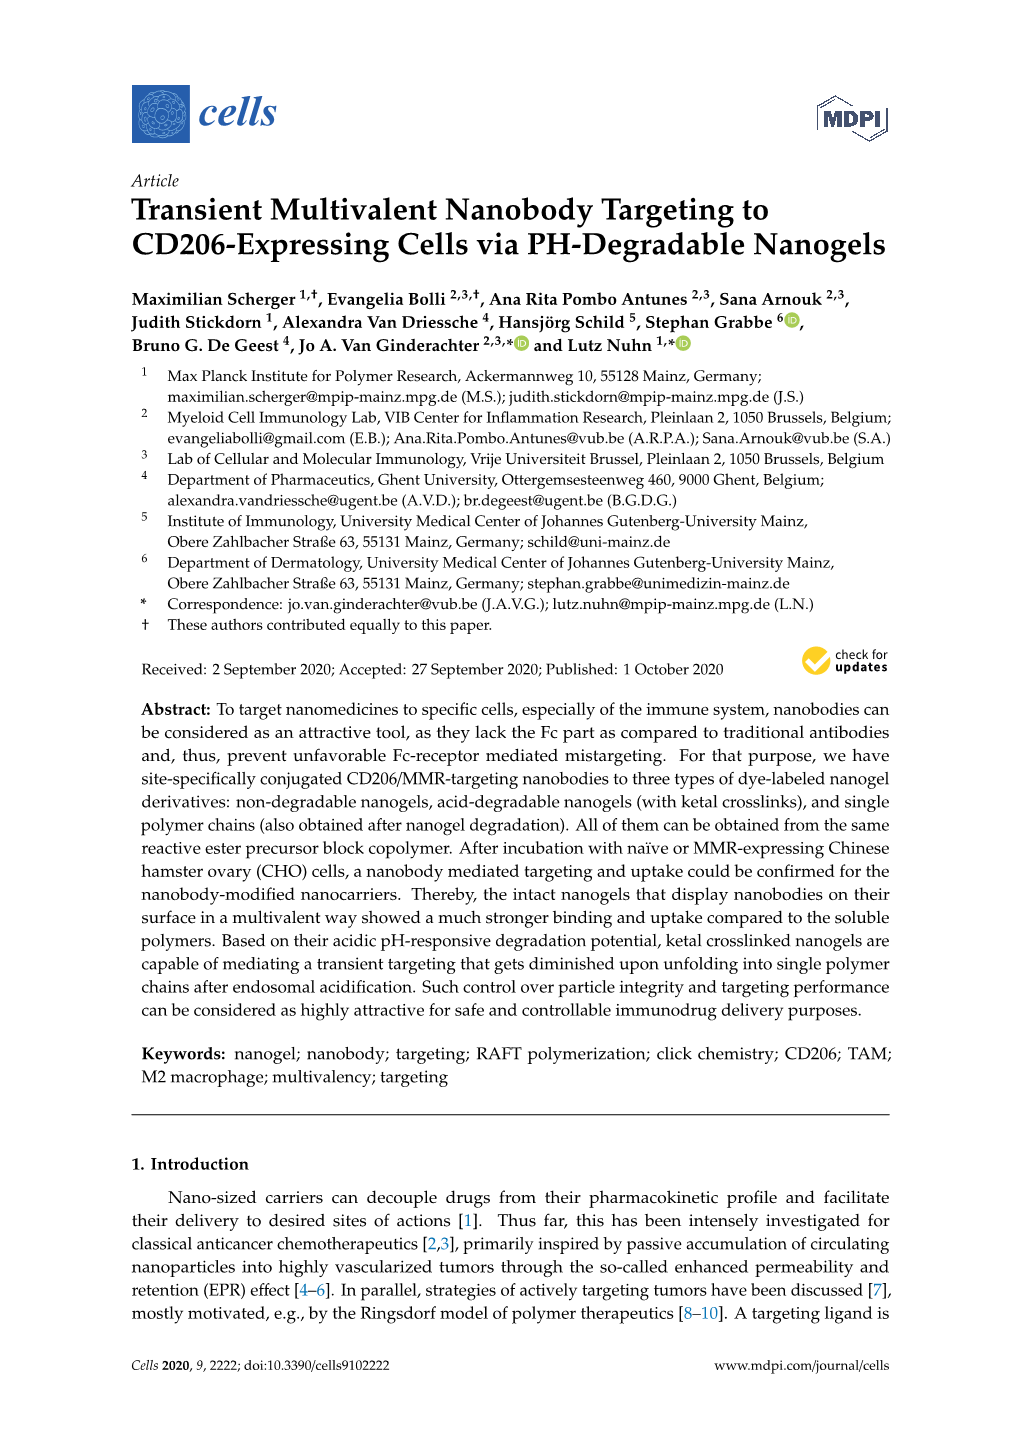 Transient Multivalent Nanobody Targeting to CD206-Expressing Cells Via PH-Degradable Nanogels